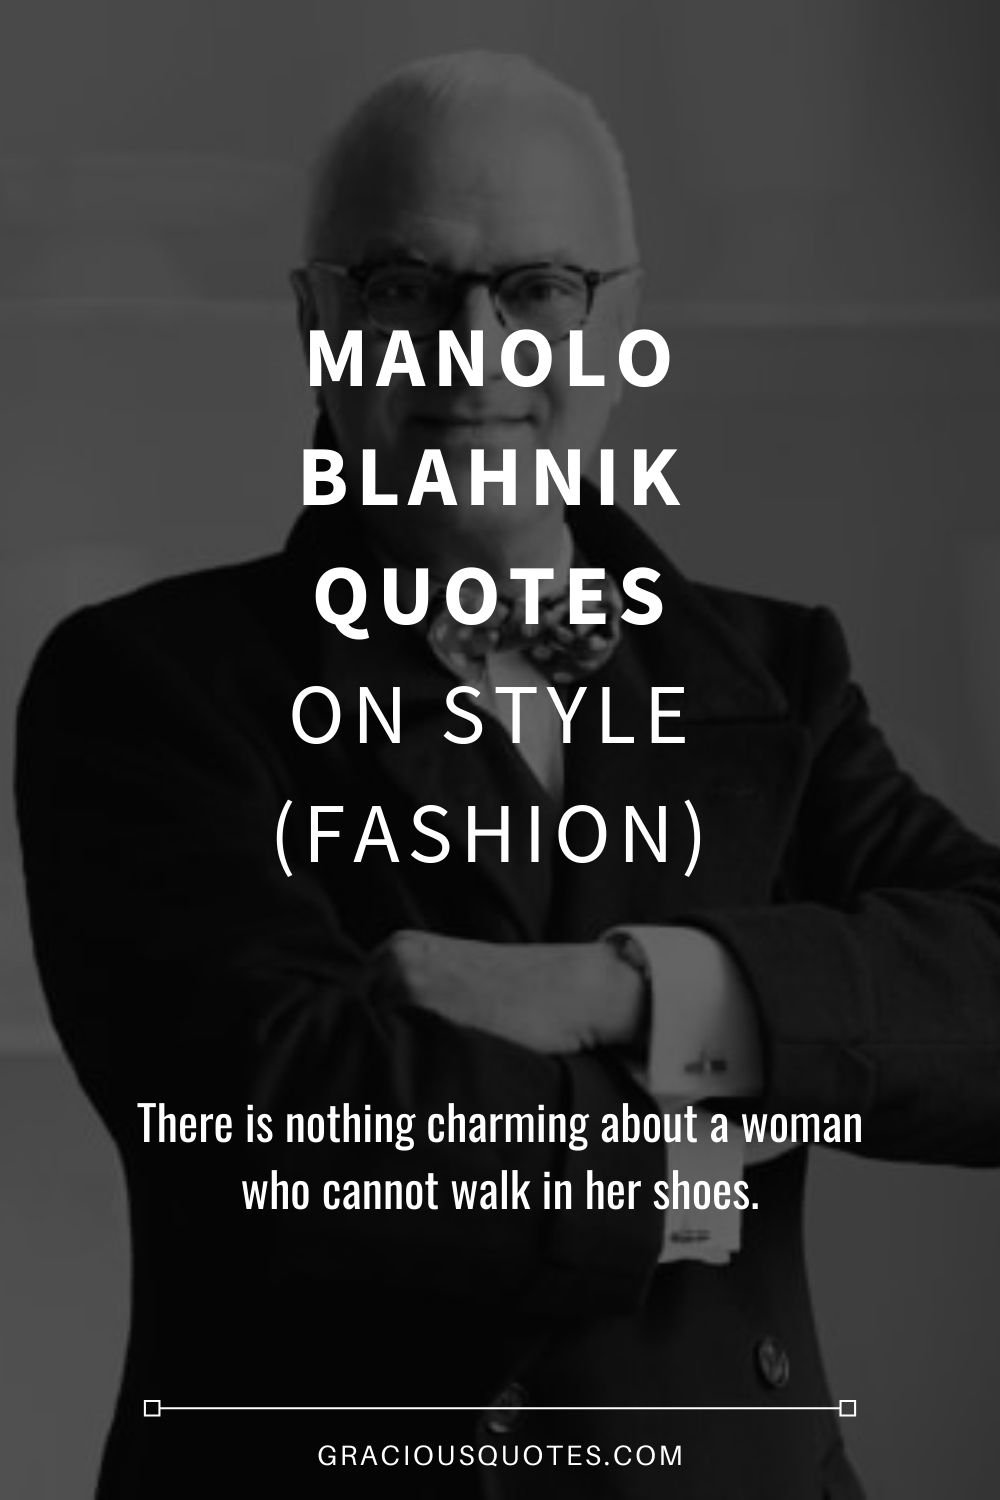 Manolo Blahnik Quotes on Style (FASHION) - Gracious Quotes